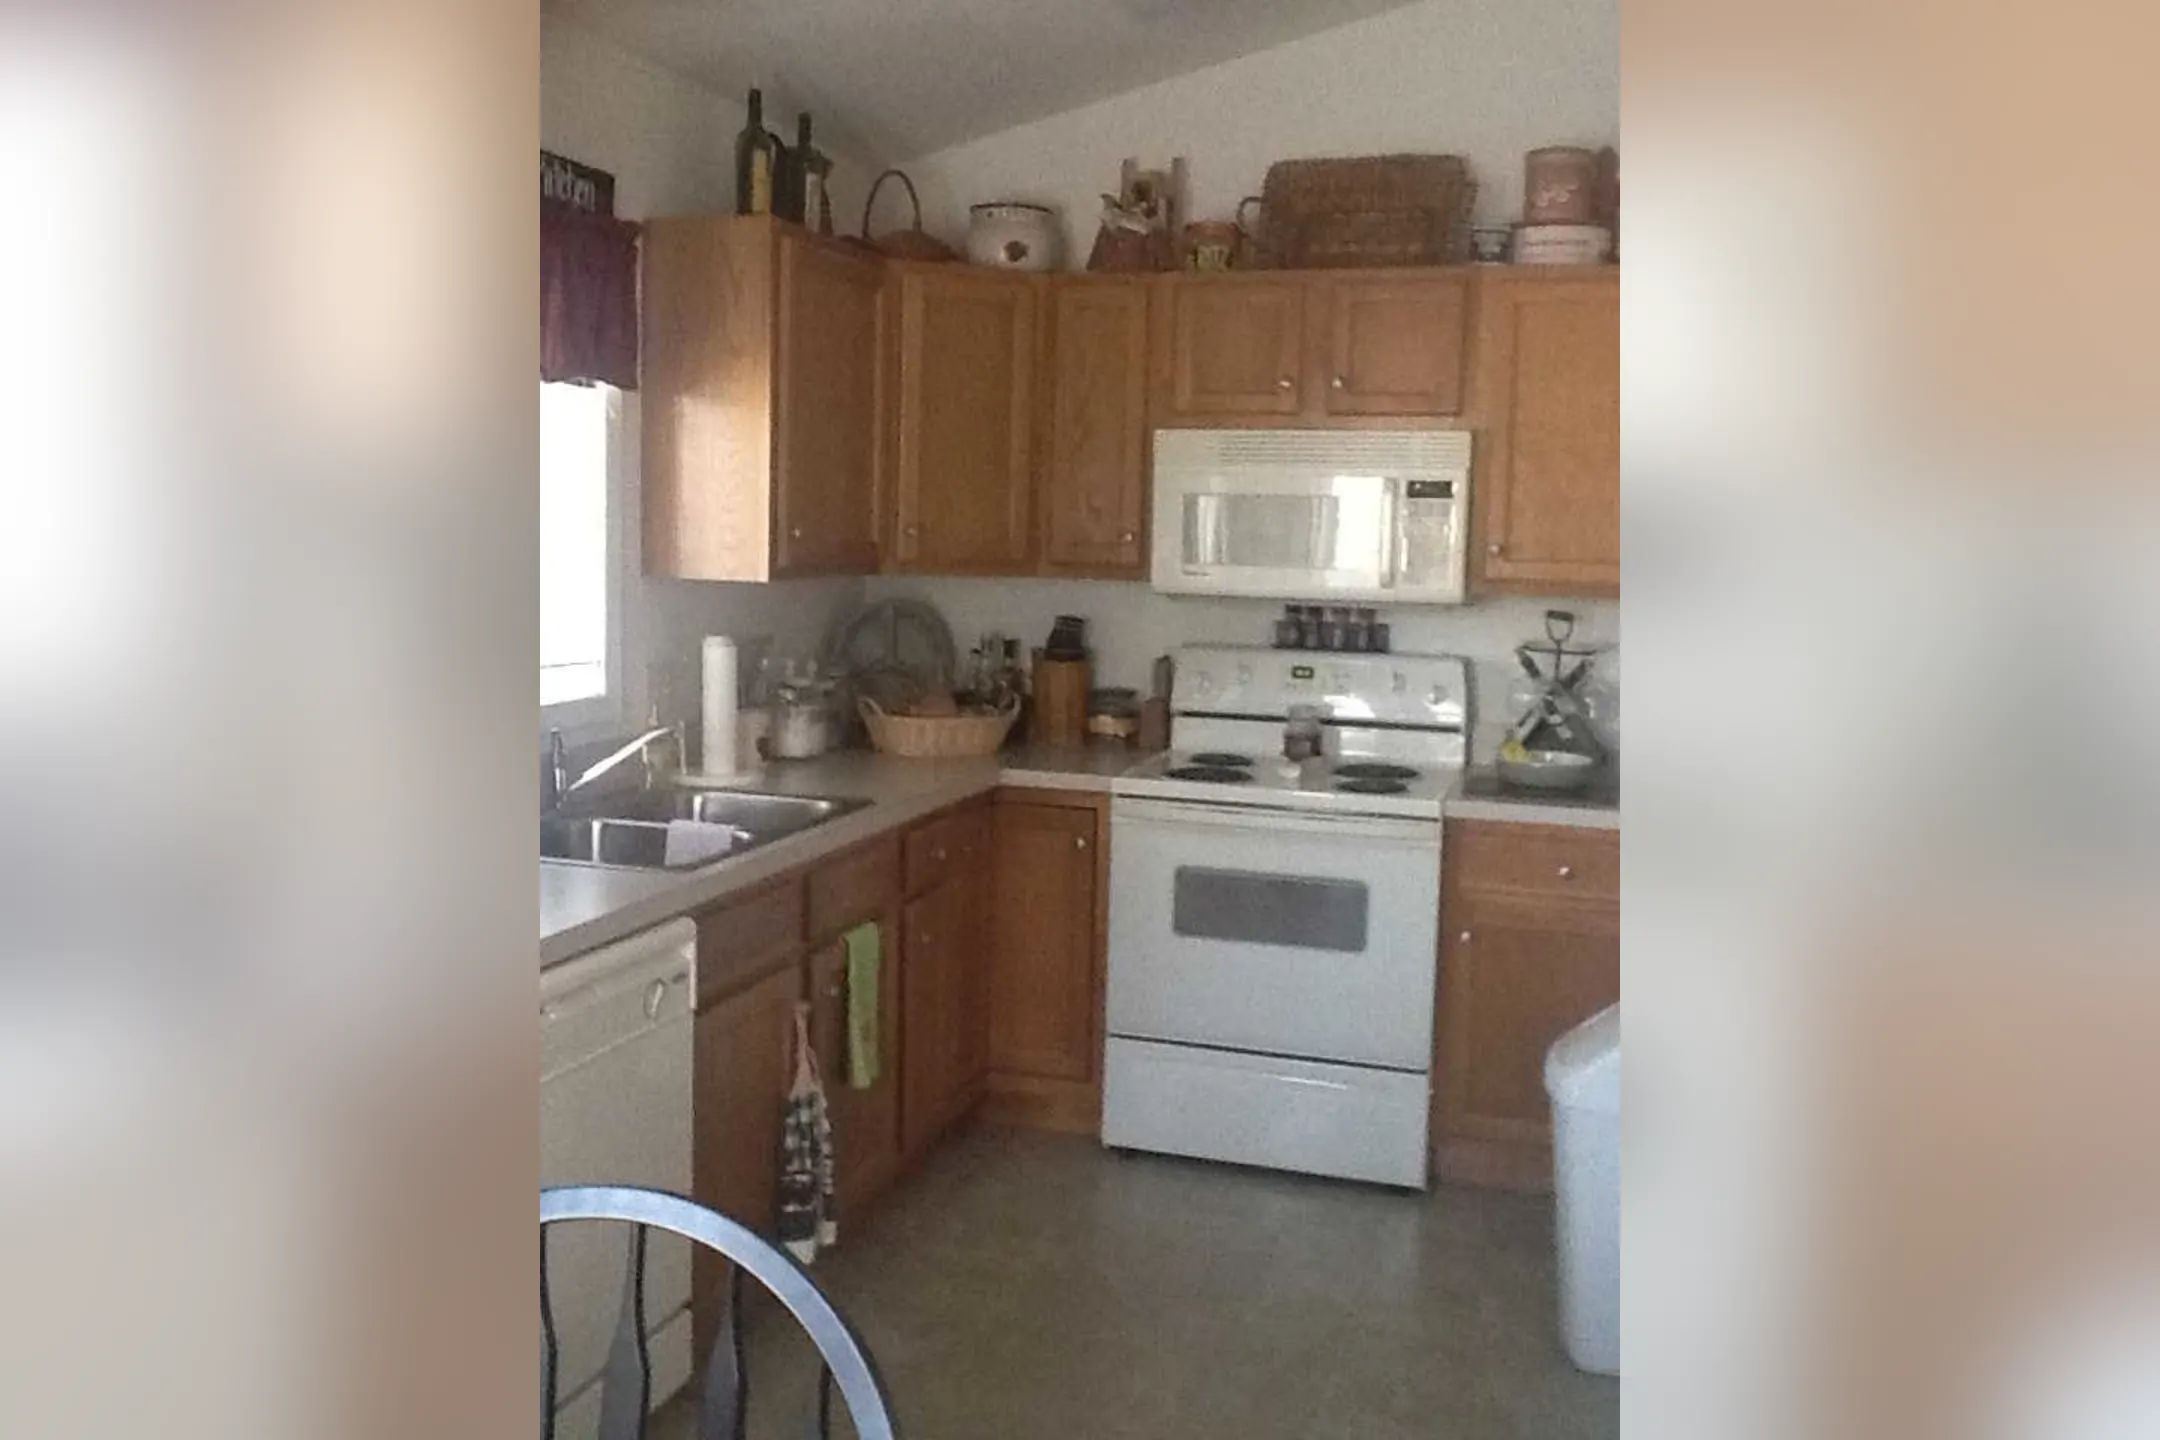 Kitchen - Kissel Hill Apartments - Lititz, PA